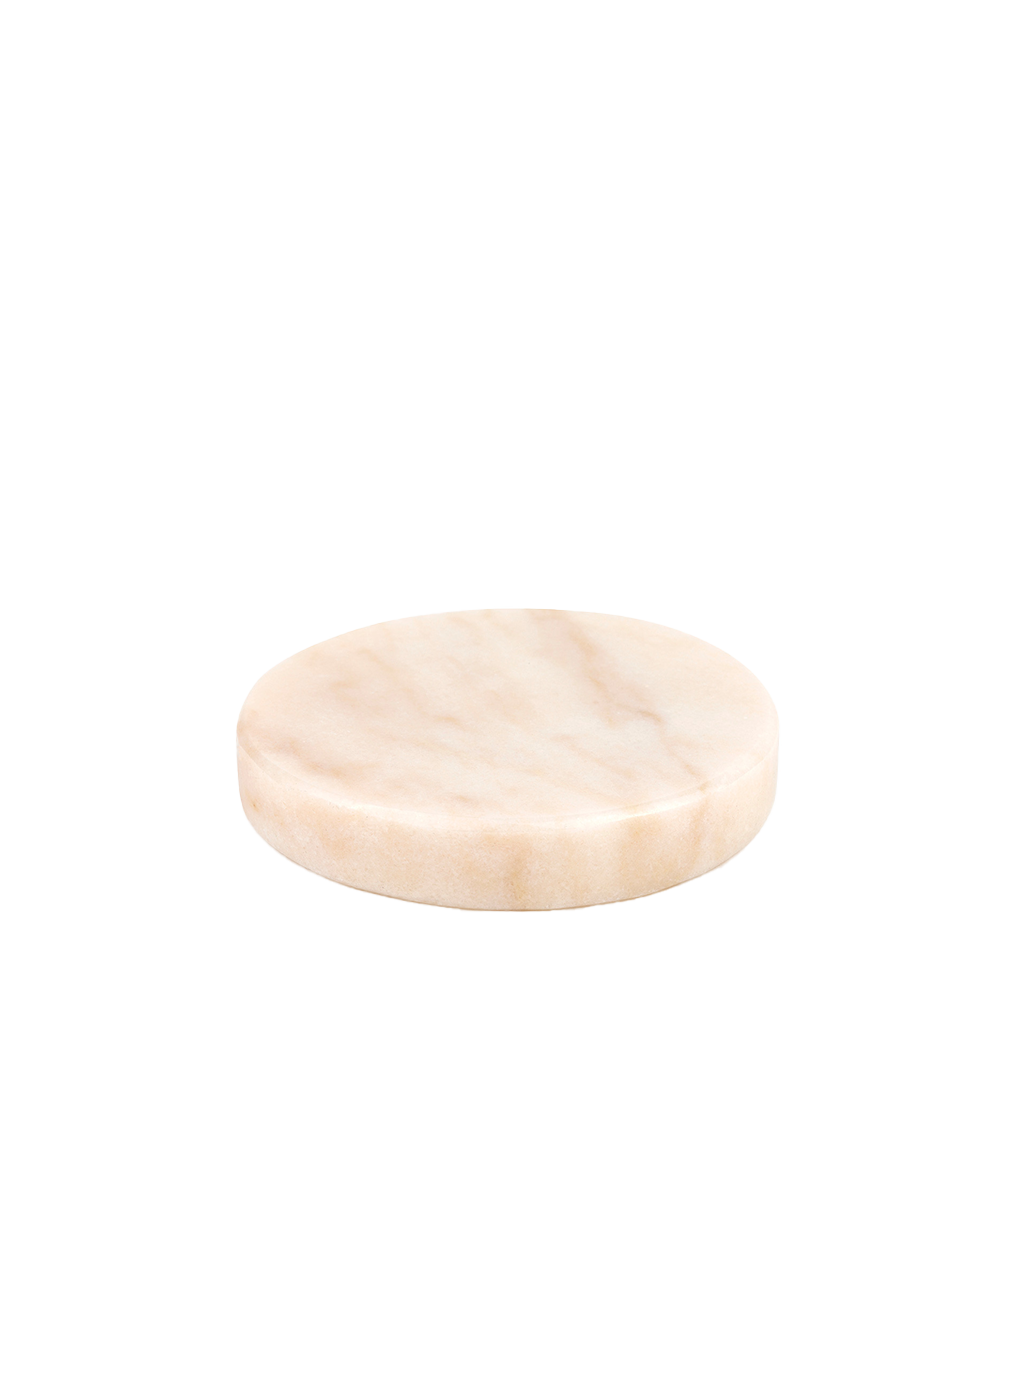 base redonda de mármol